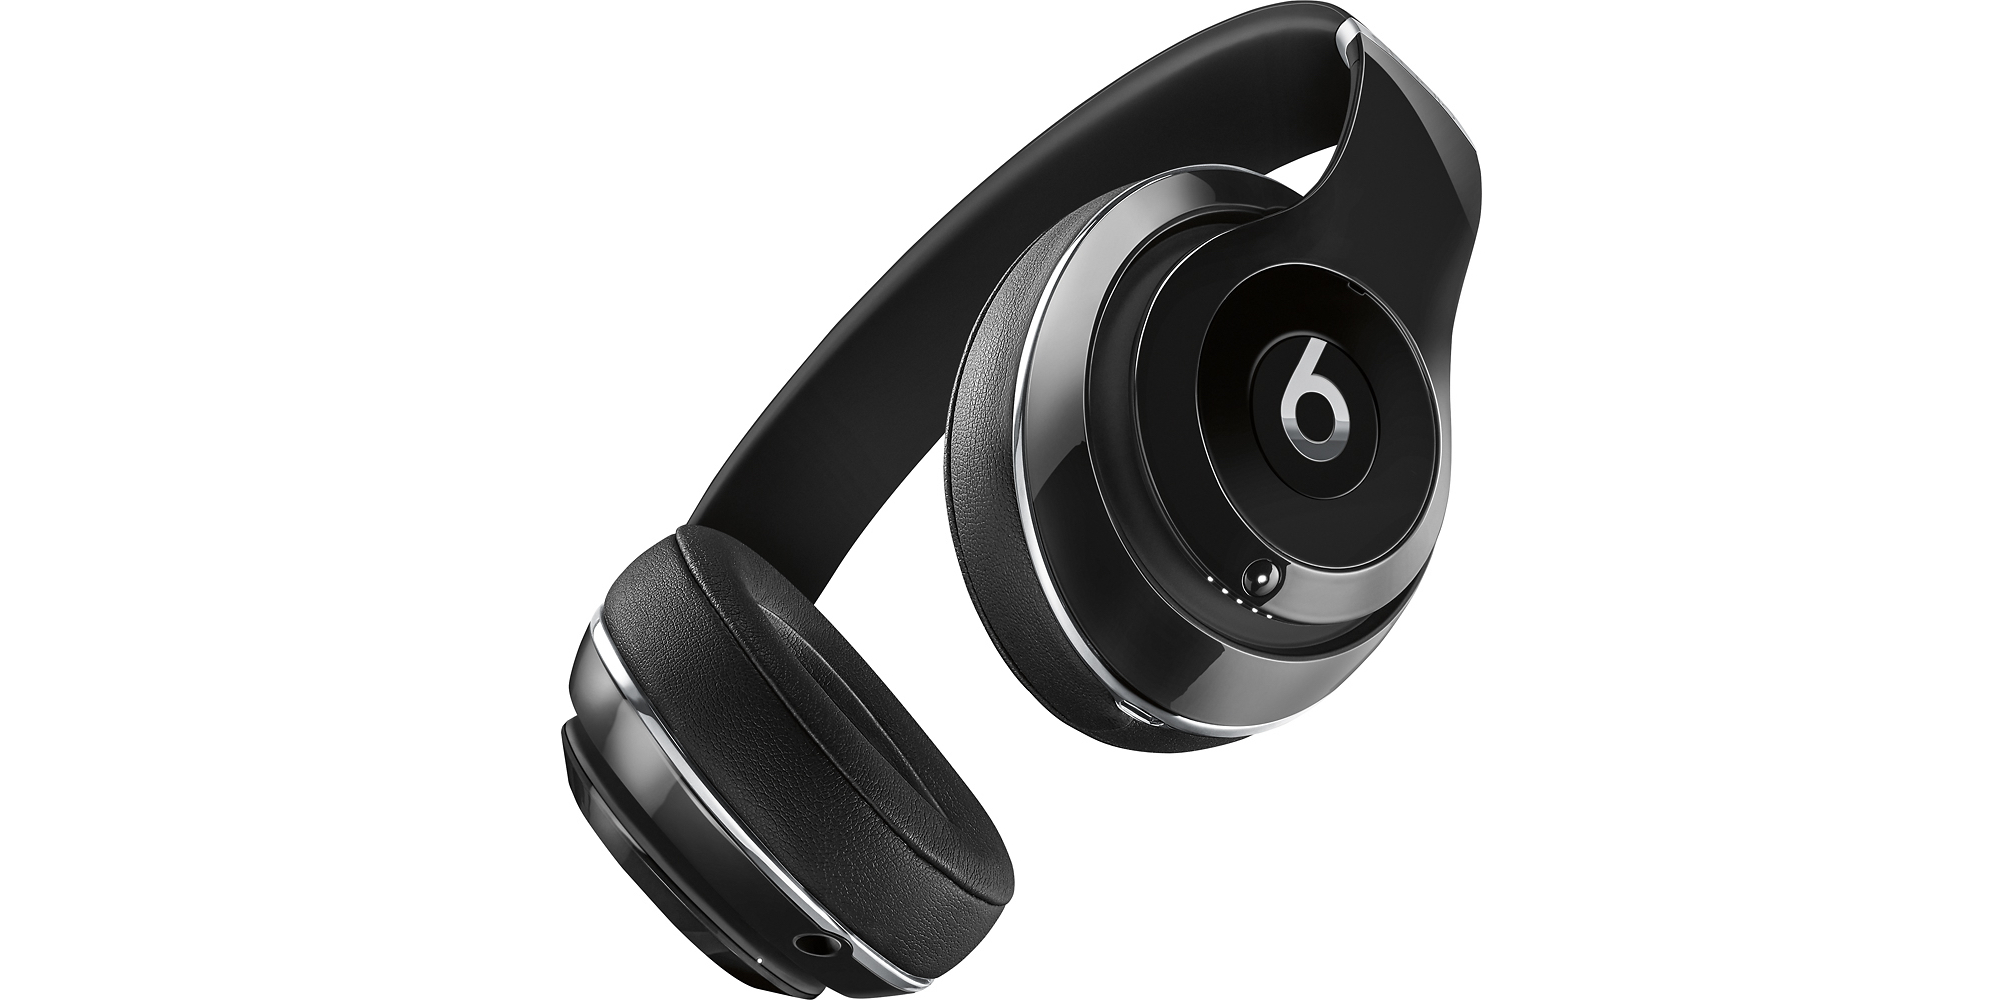 Daily Deals: Beats Studio Wireless Over-Ear Samson USB Studio Microphone $45, more